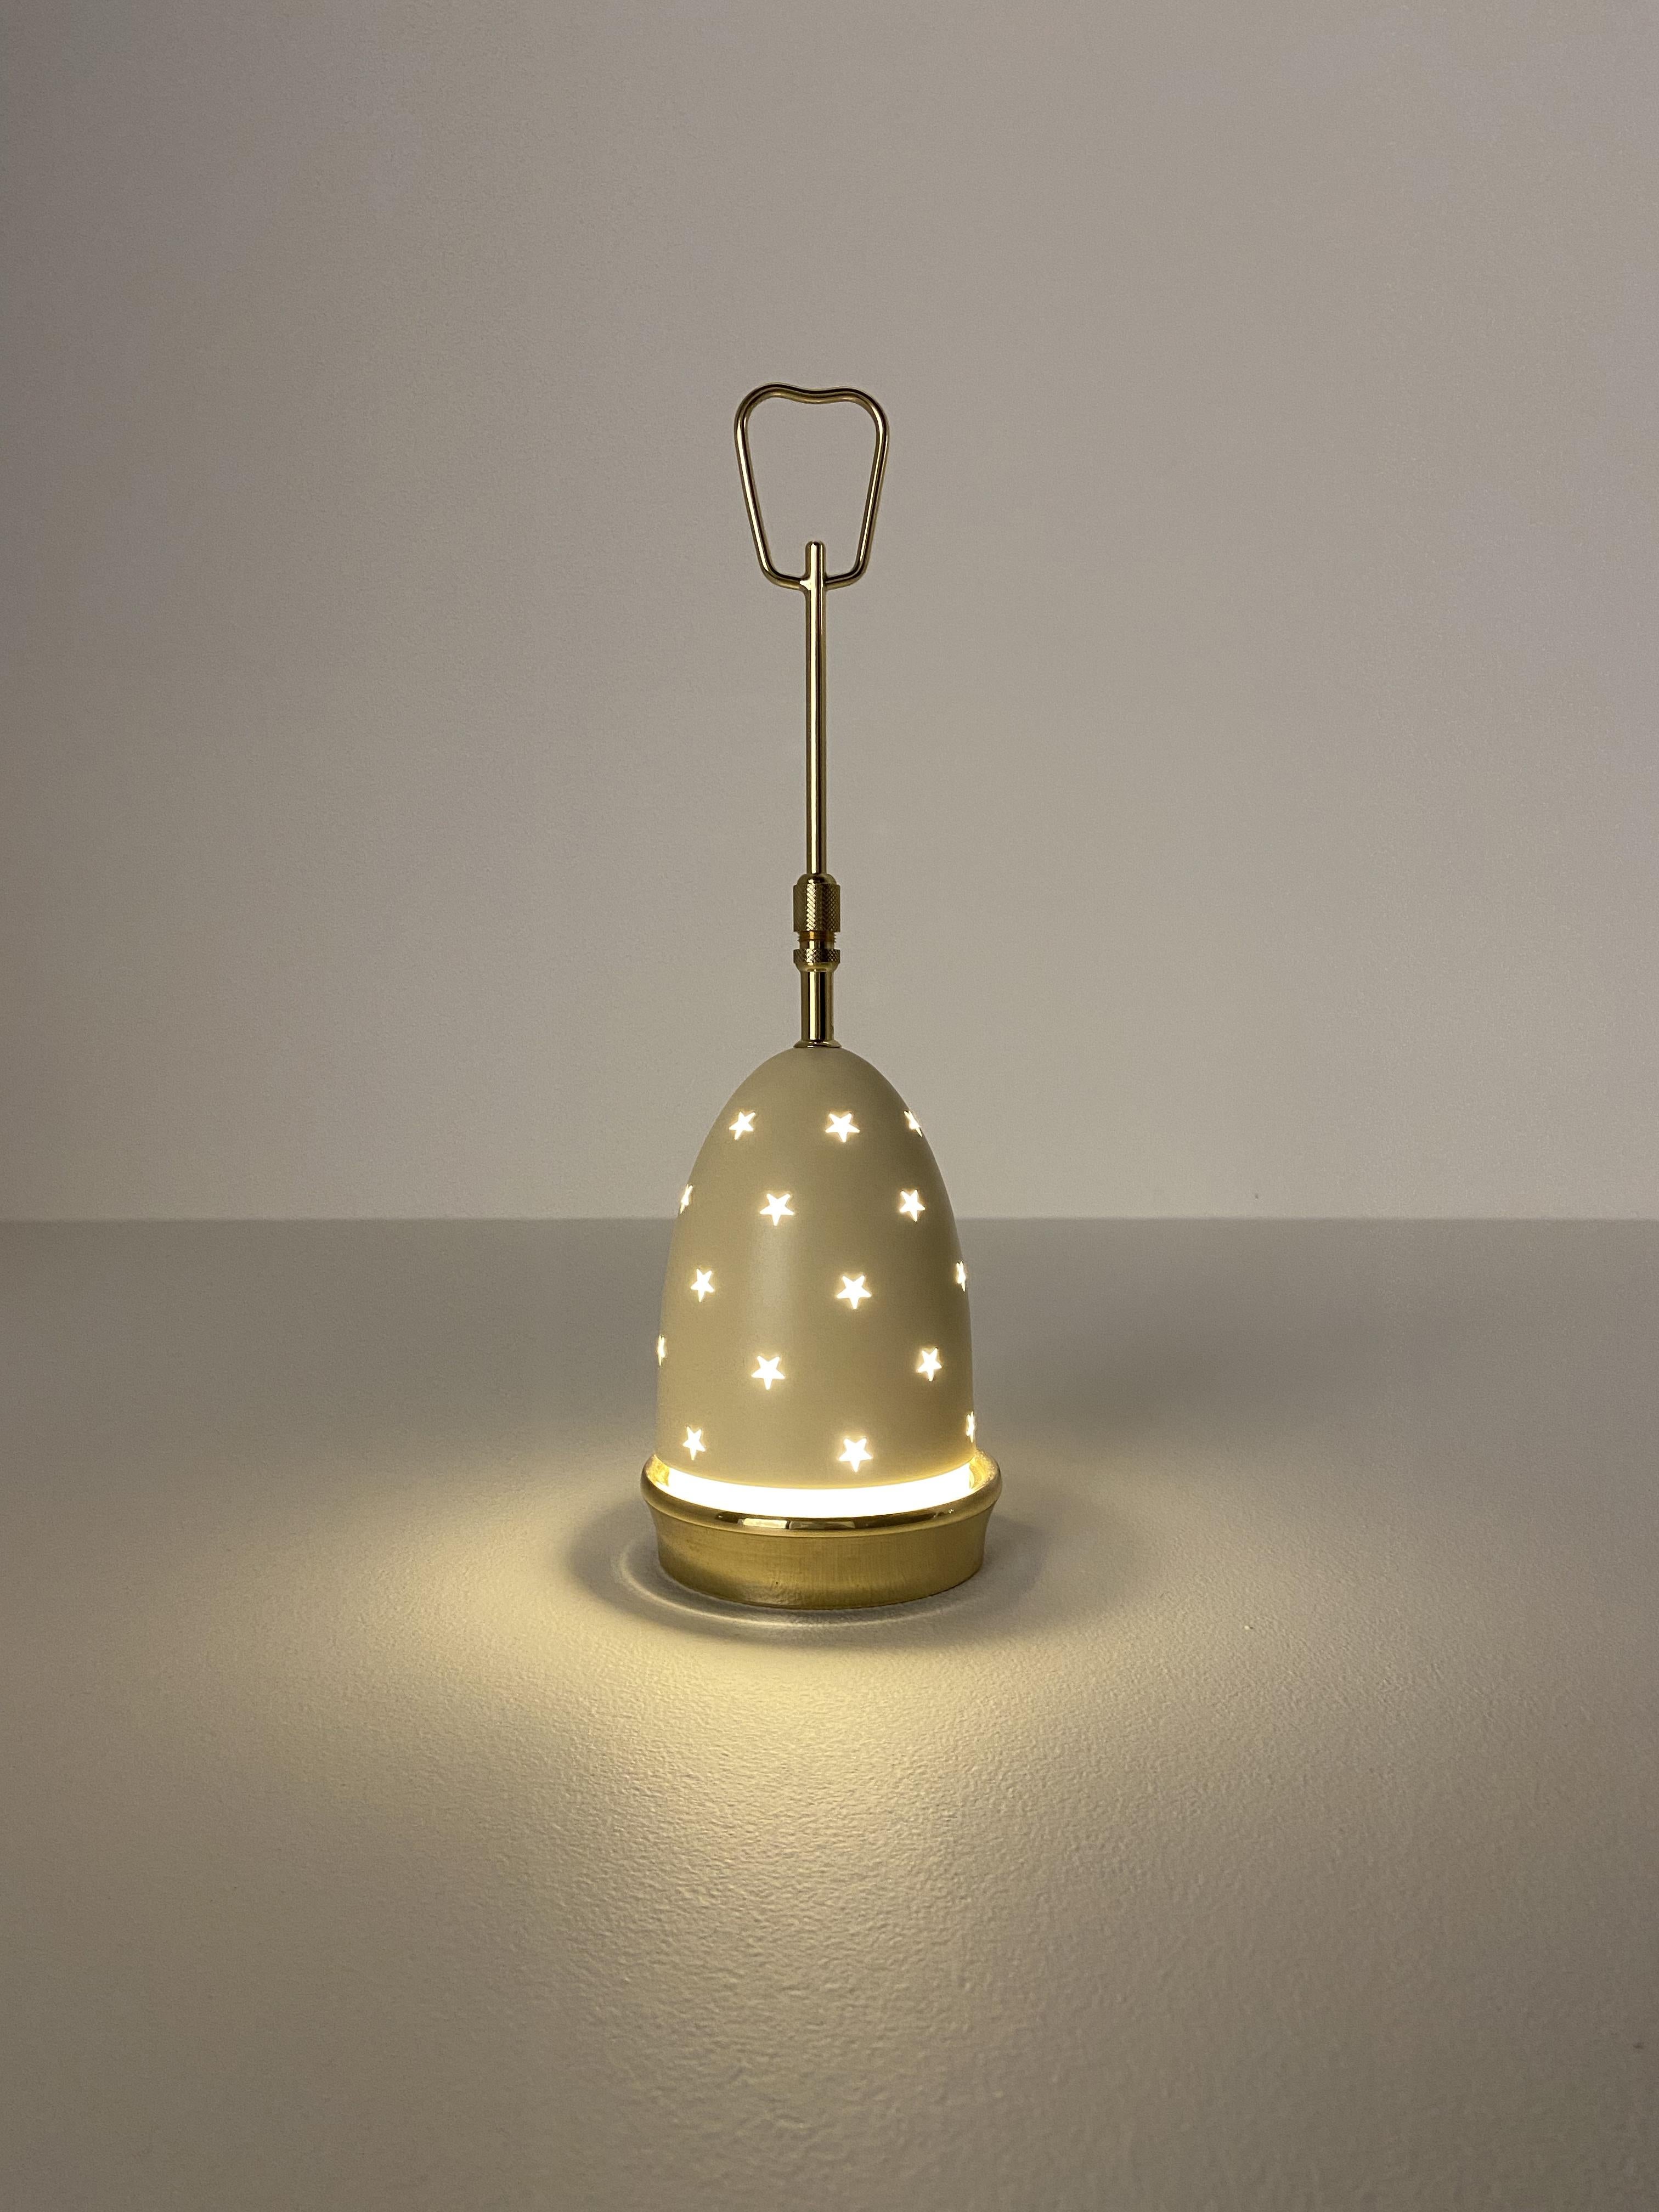 Italian 21st Century White Stellina Table Lamp Angelo Lelii 2019 Style of 1950s Italy